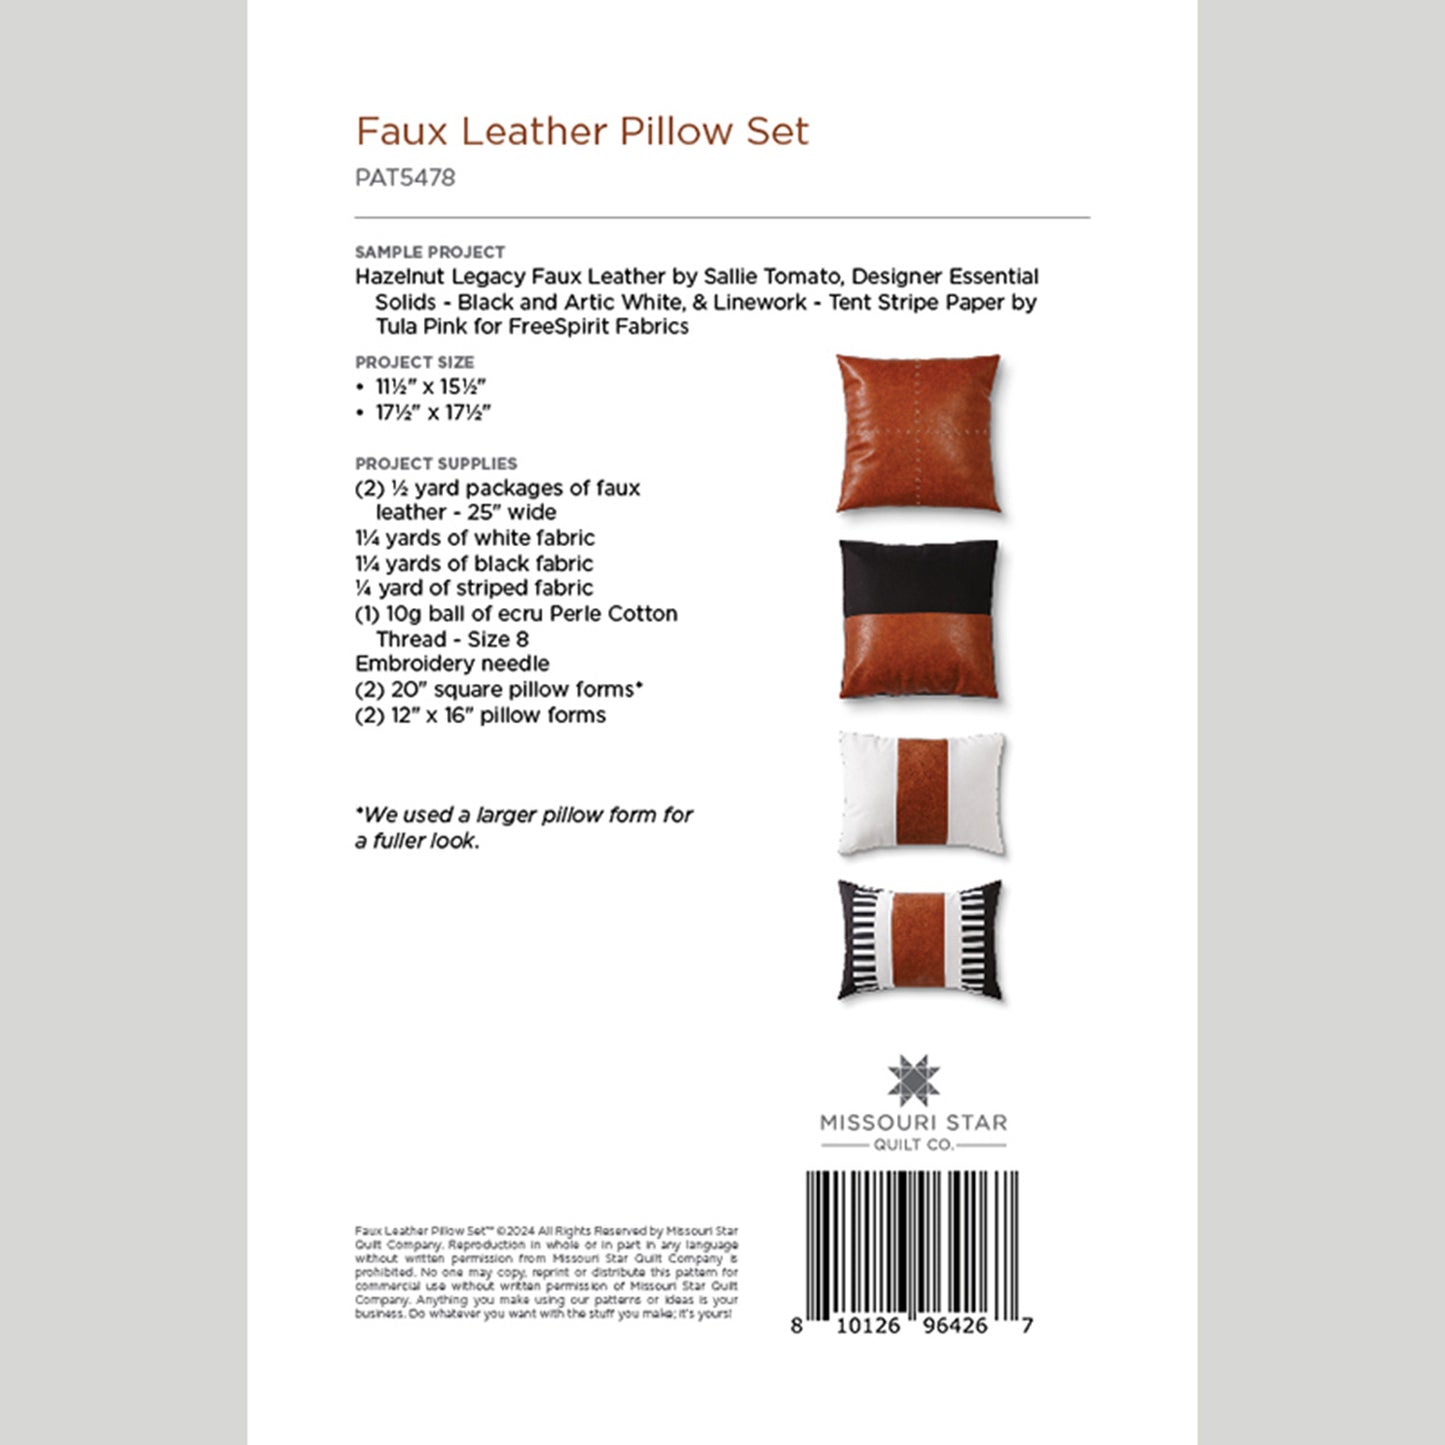 Faux Leather Pillow Set Pattern by Missouri Star Alternative View #1